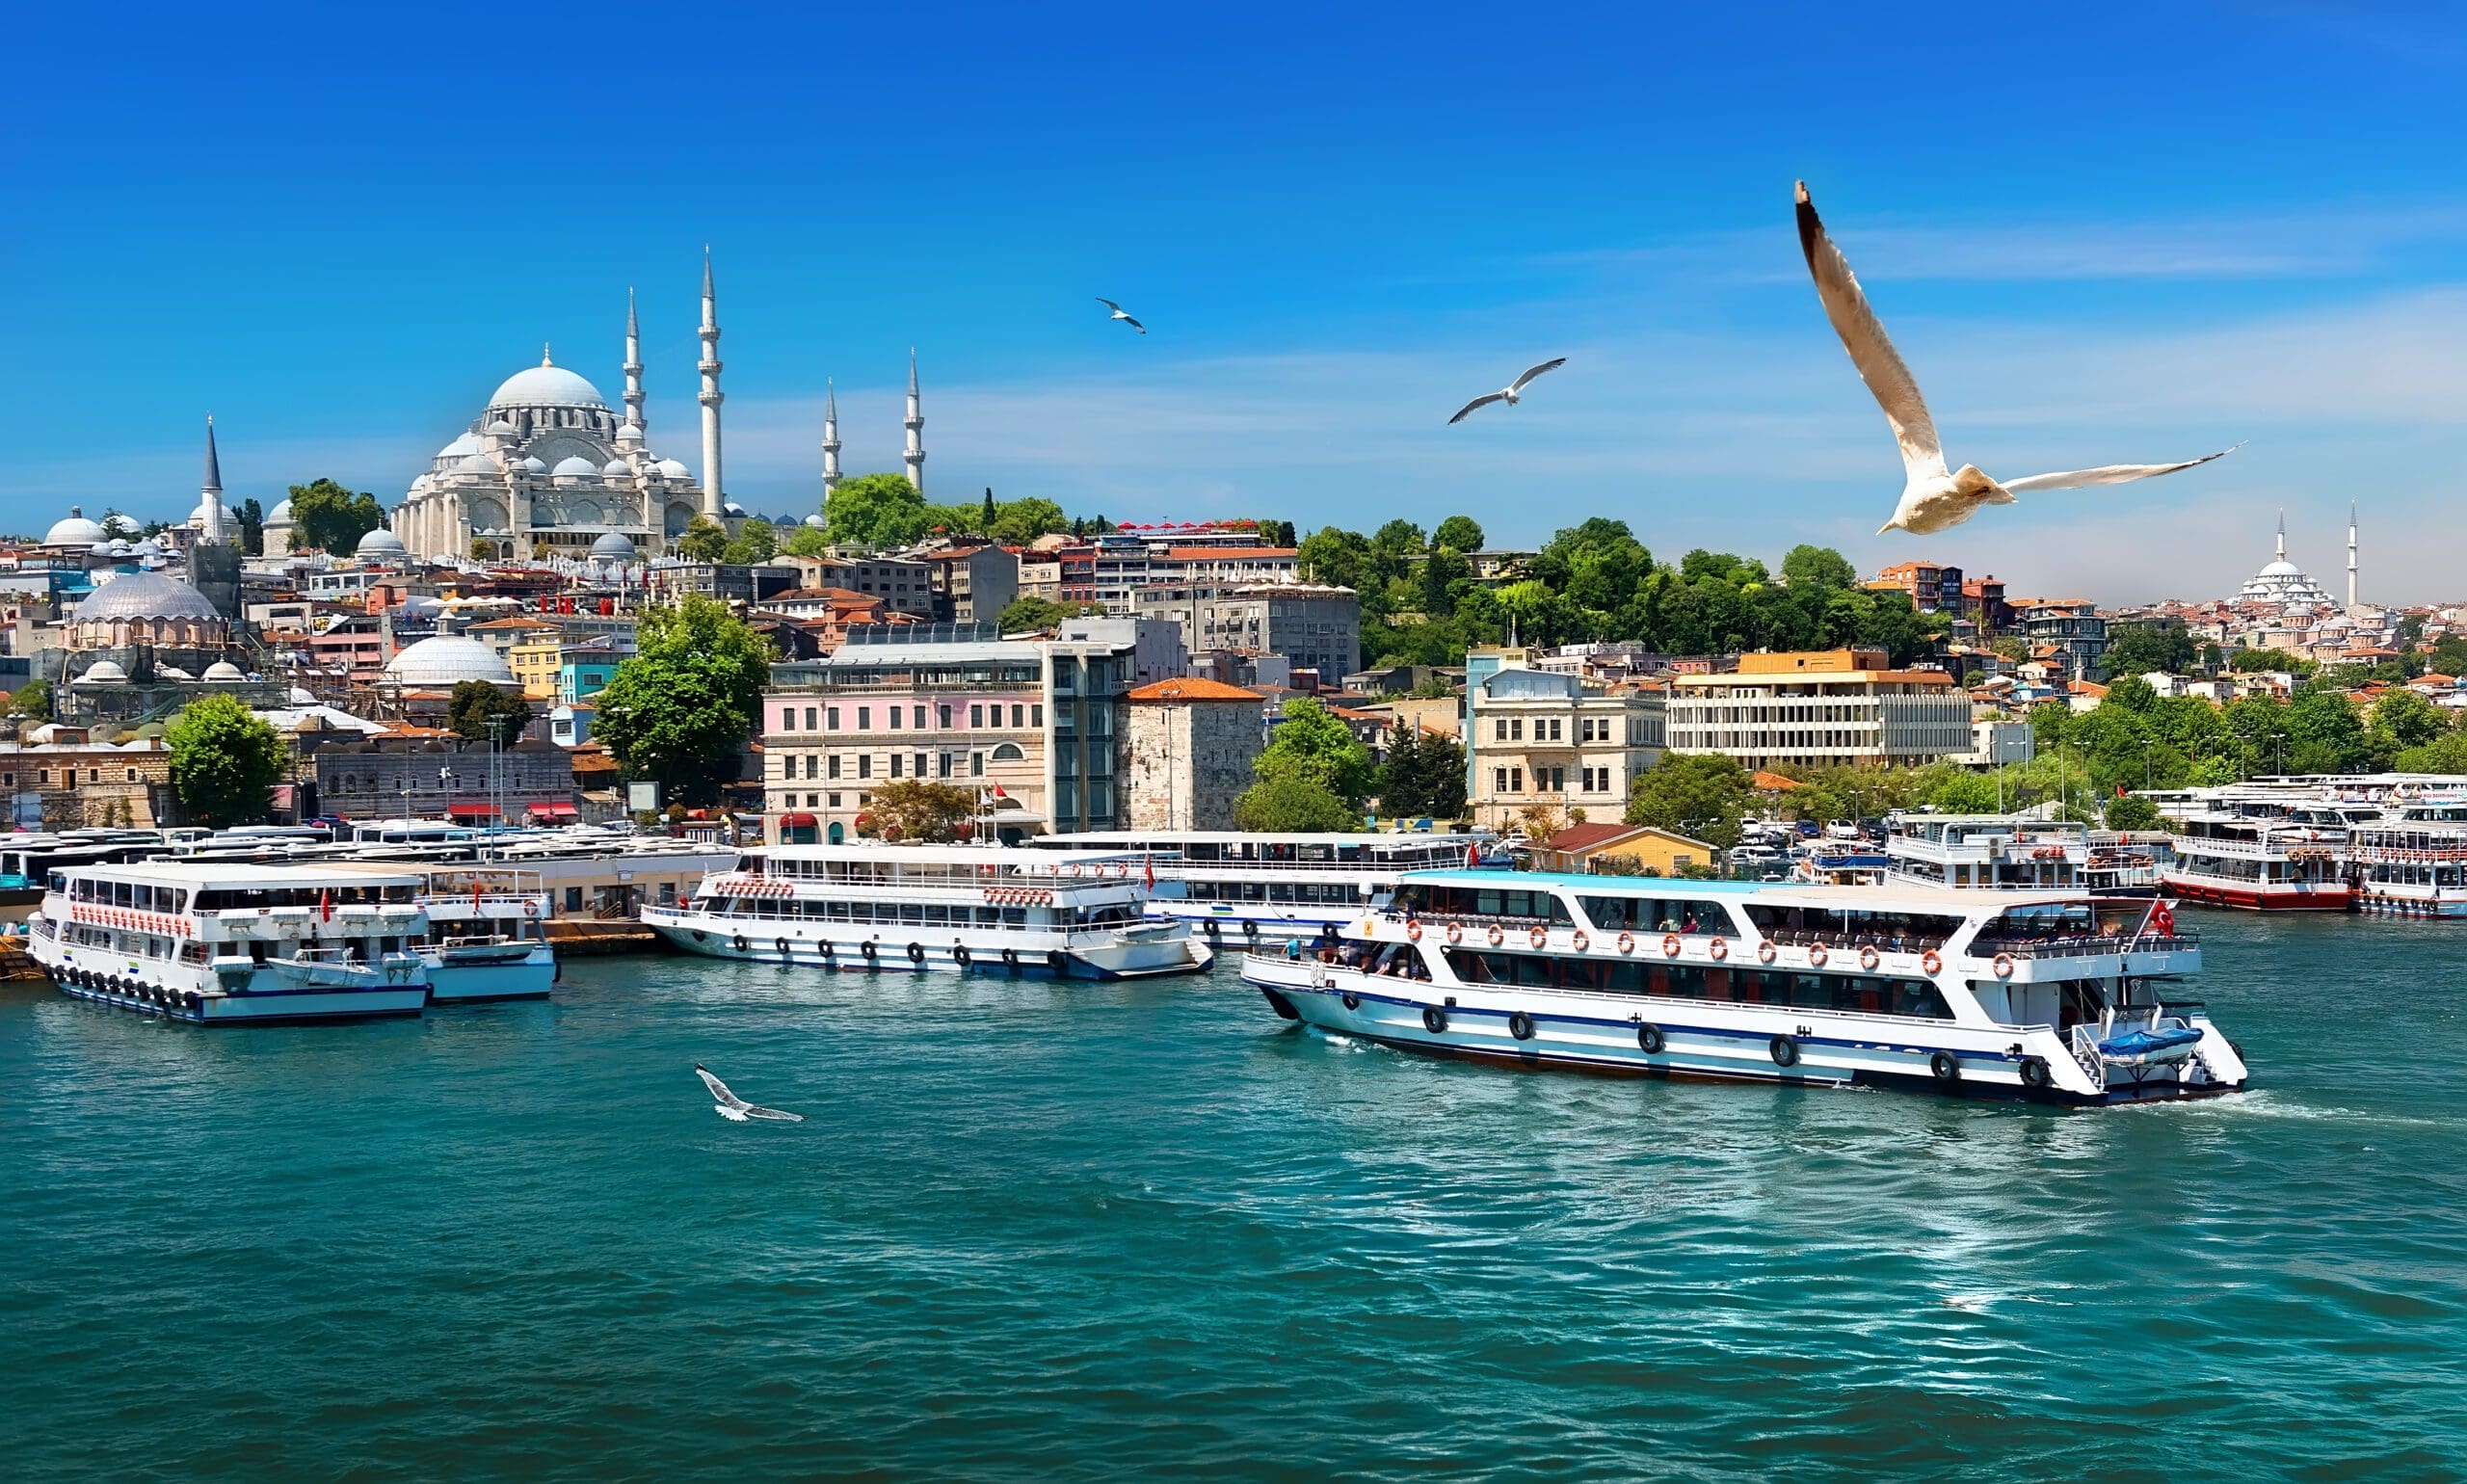 boats-in-istanbul-2021-08-26-17-20-02-utc-scaled.jpg